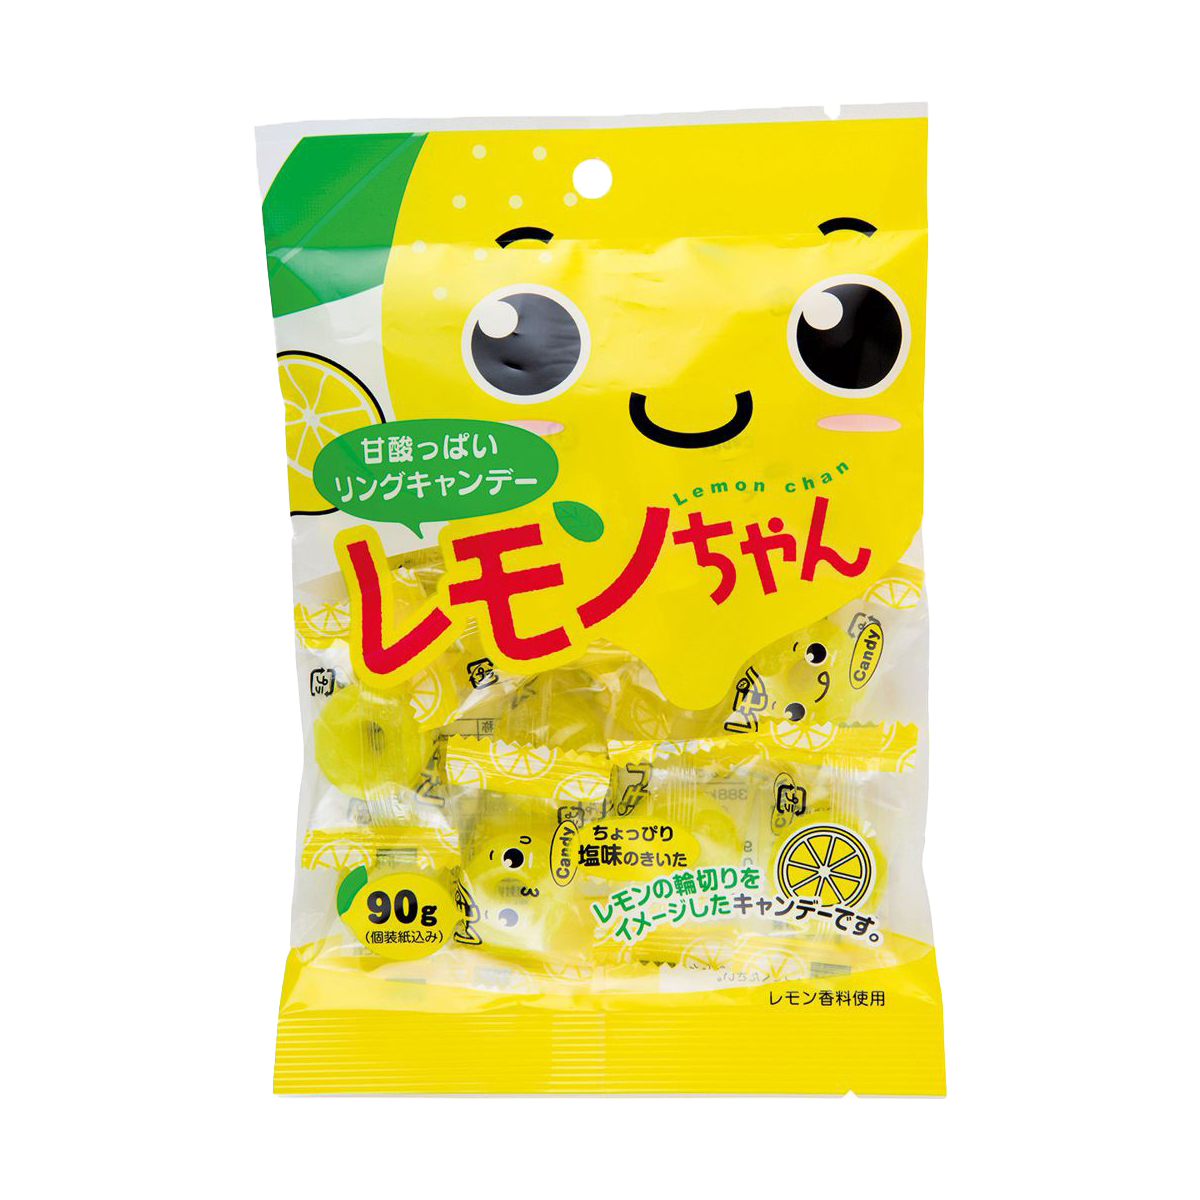 Bala de Limão Japonesa Remon chan Kawaguchi - 90 gramas